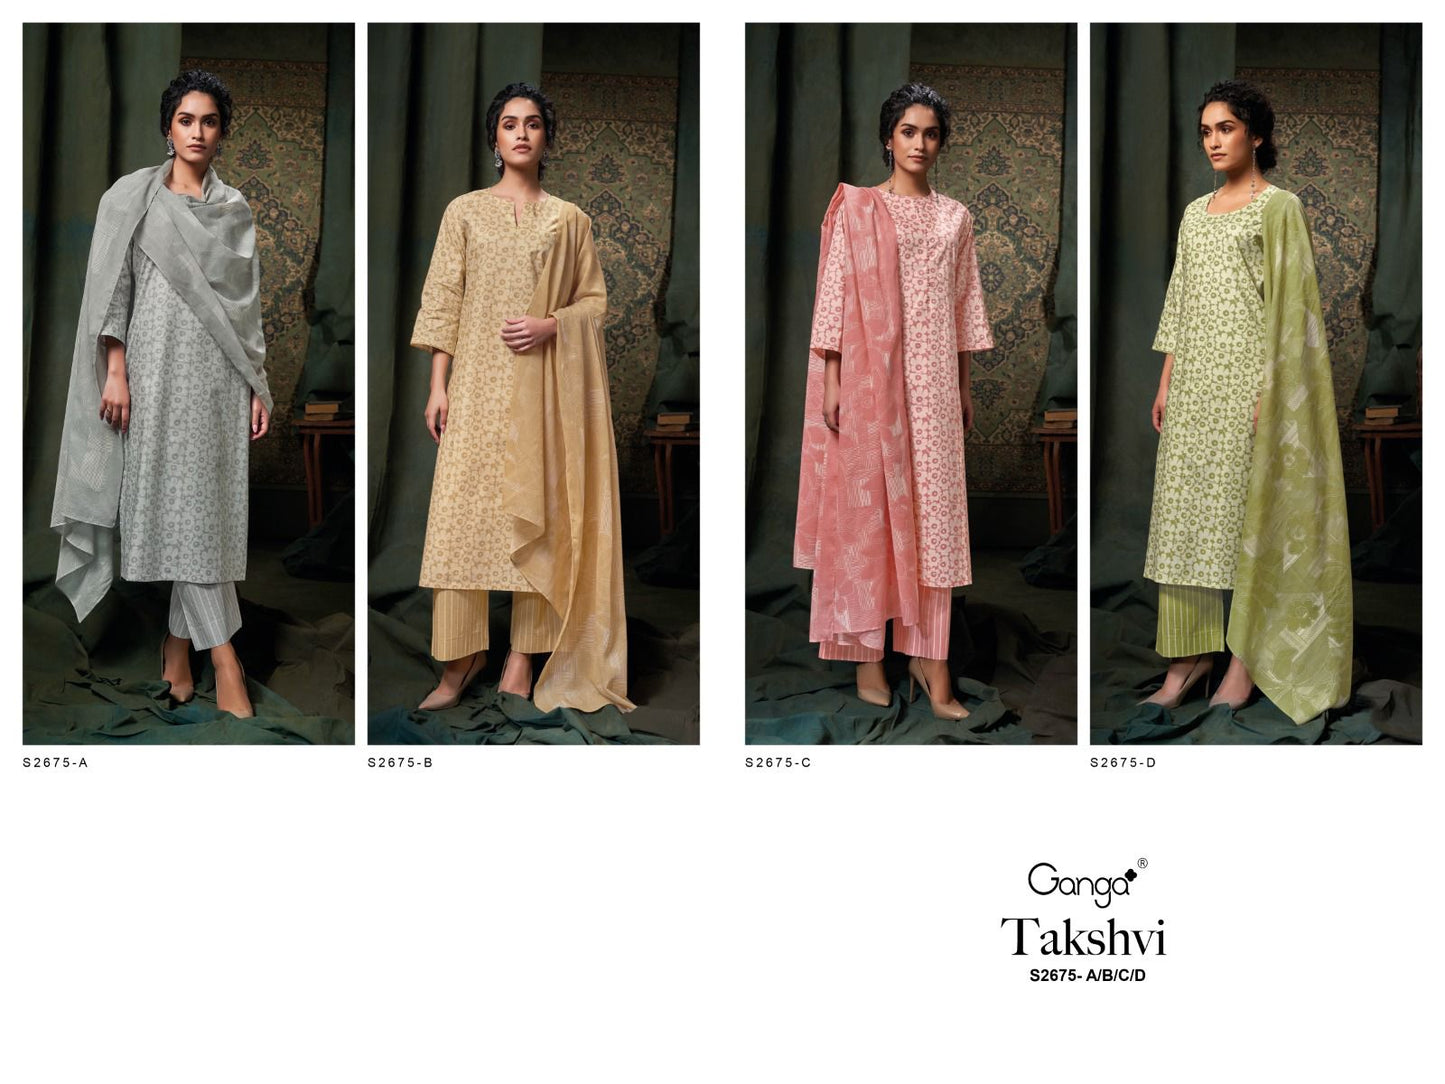 Takshvi 2675 Ganga Premium Cotton Plazzo Style Suits Wholesale Rate